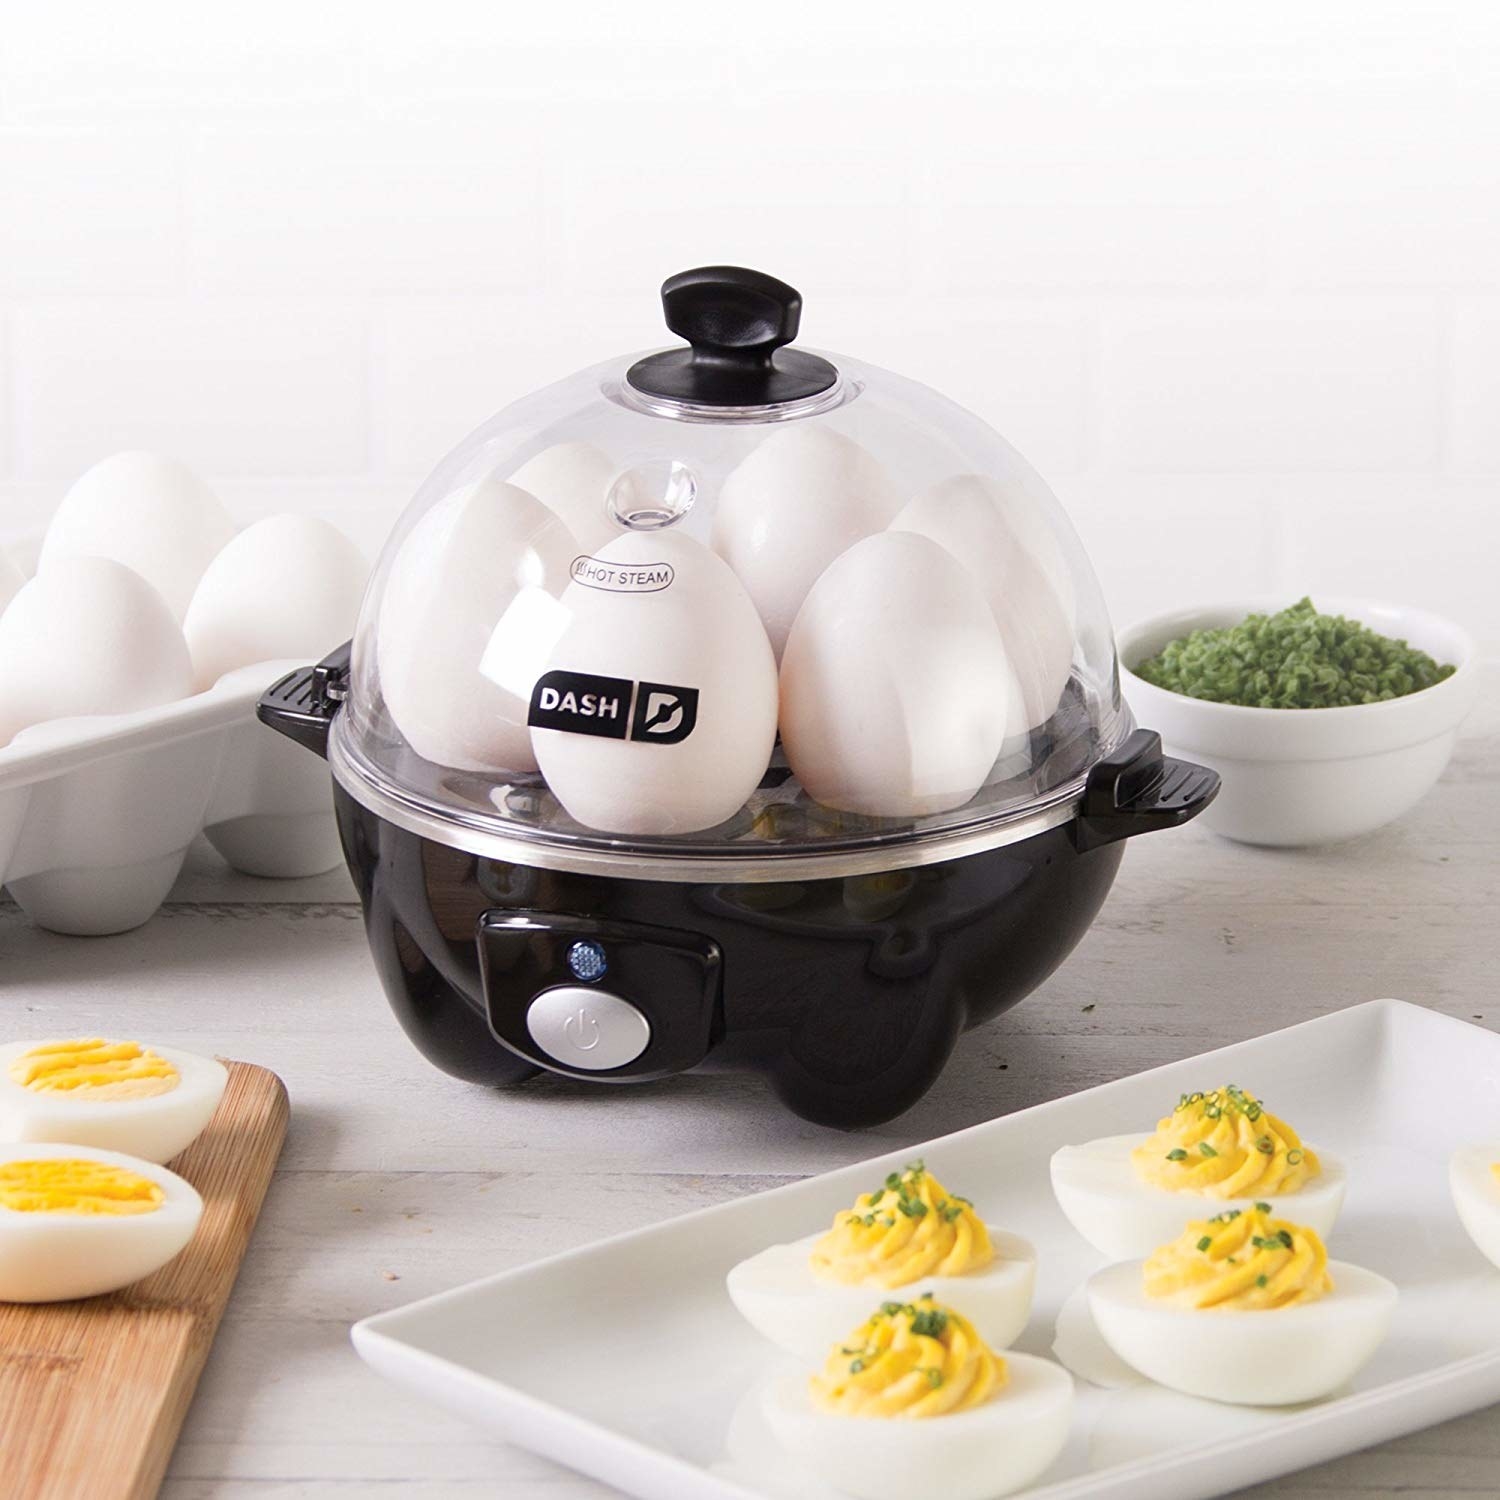 The domed egg cooker in black